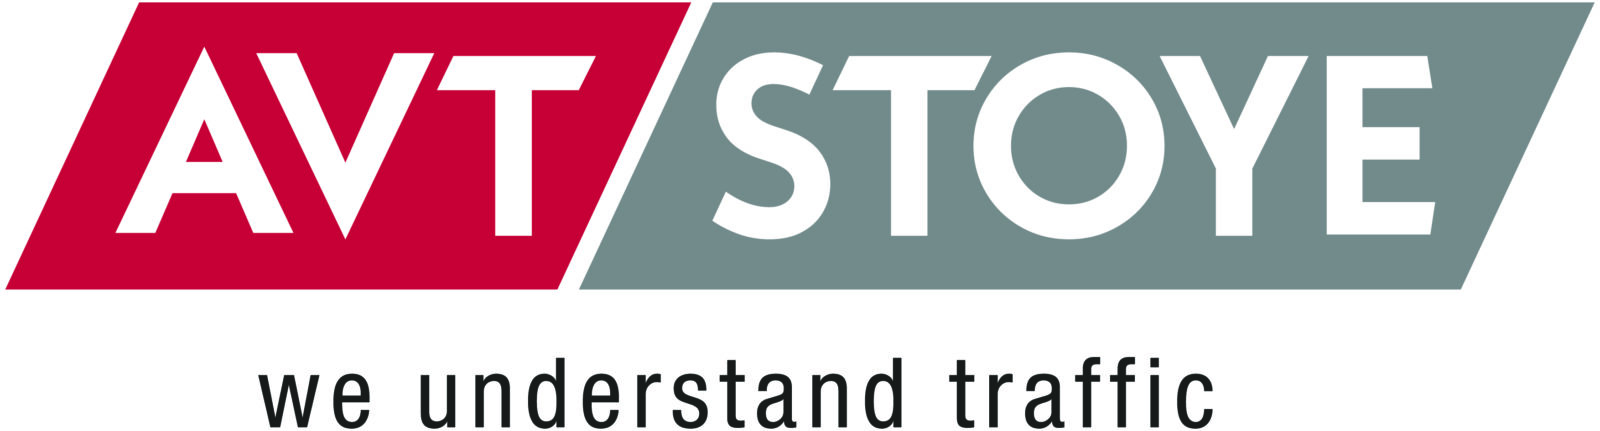 Logo von der Firma "AVT Stoye"